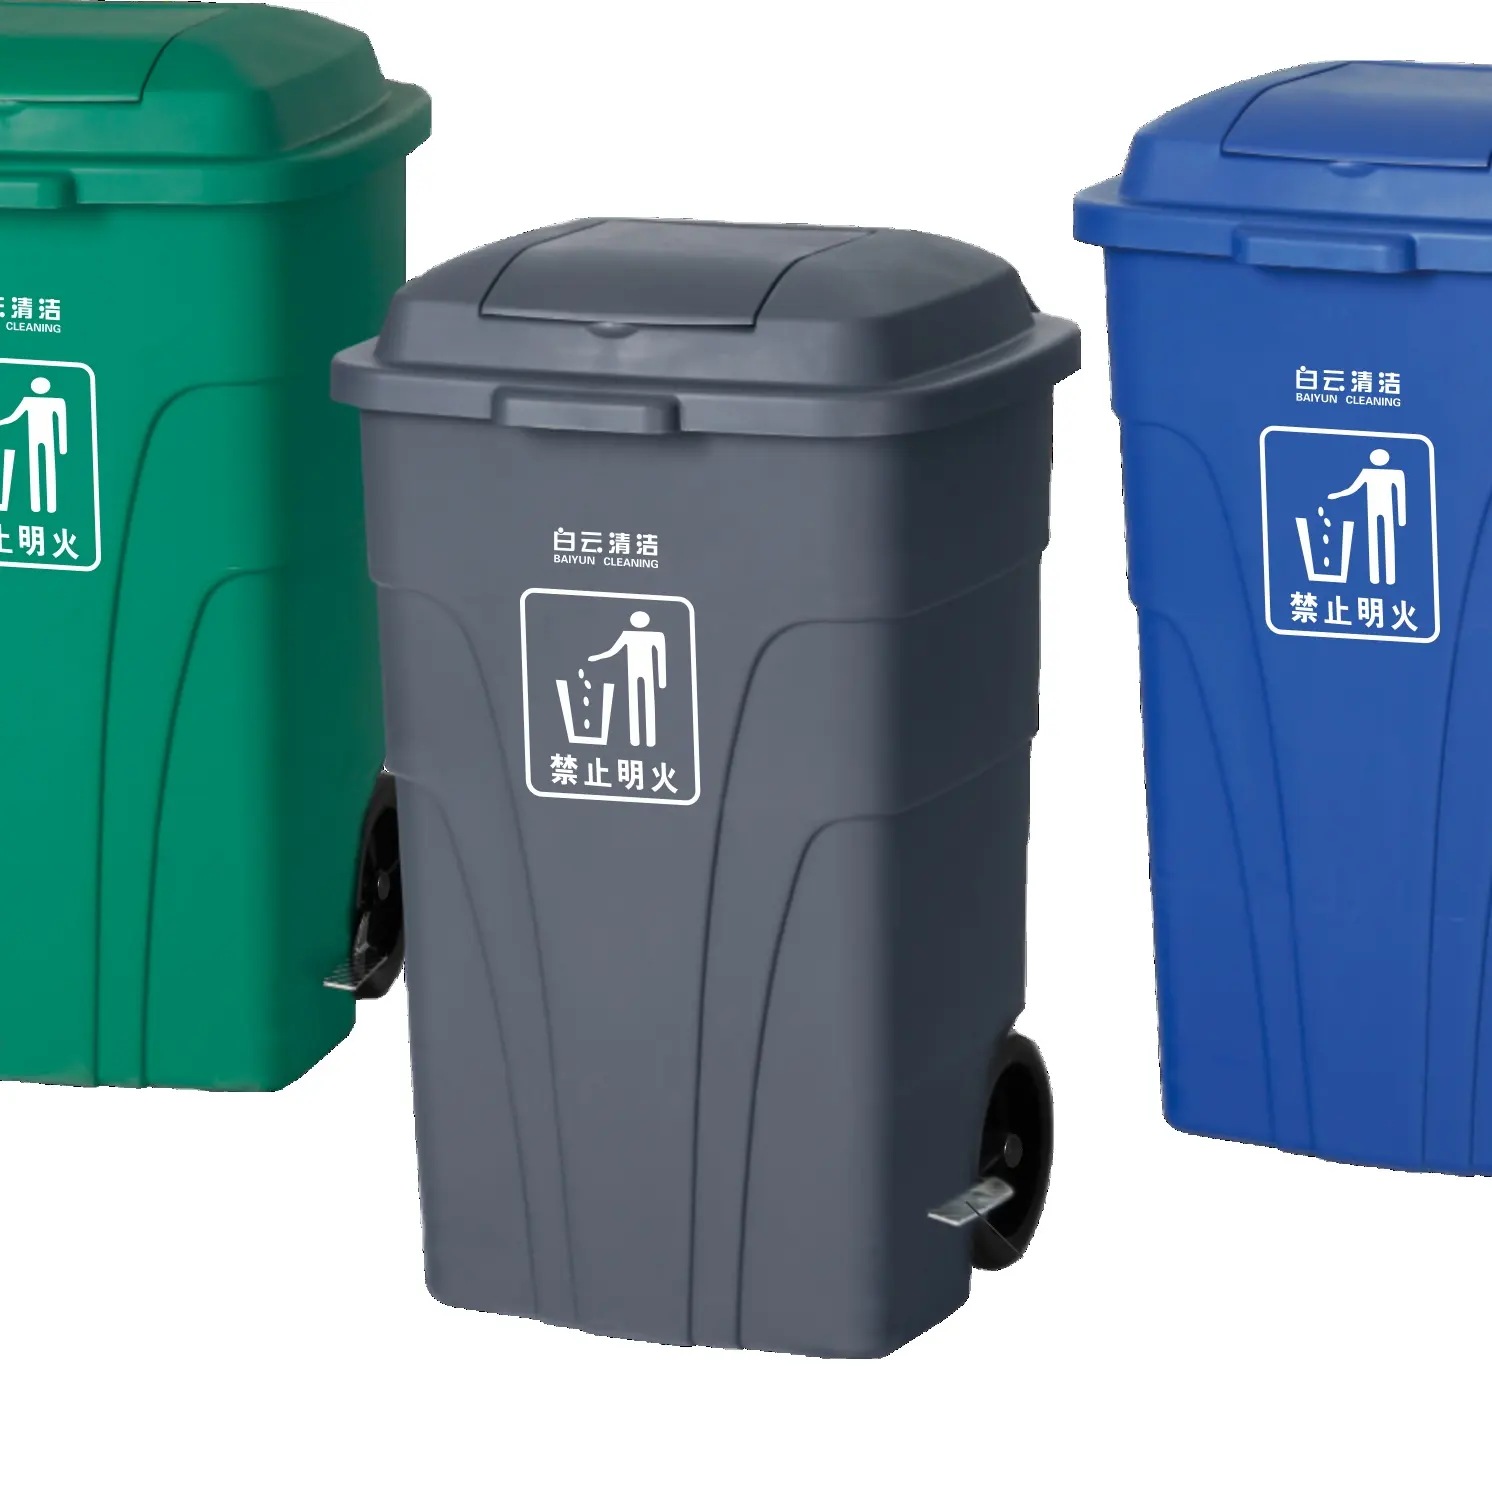 Baiyun Cleaning Wholesale Best Price Large Plastic Outdoor Garbage Bin 120 Liter Waste Bins